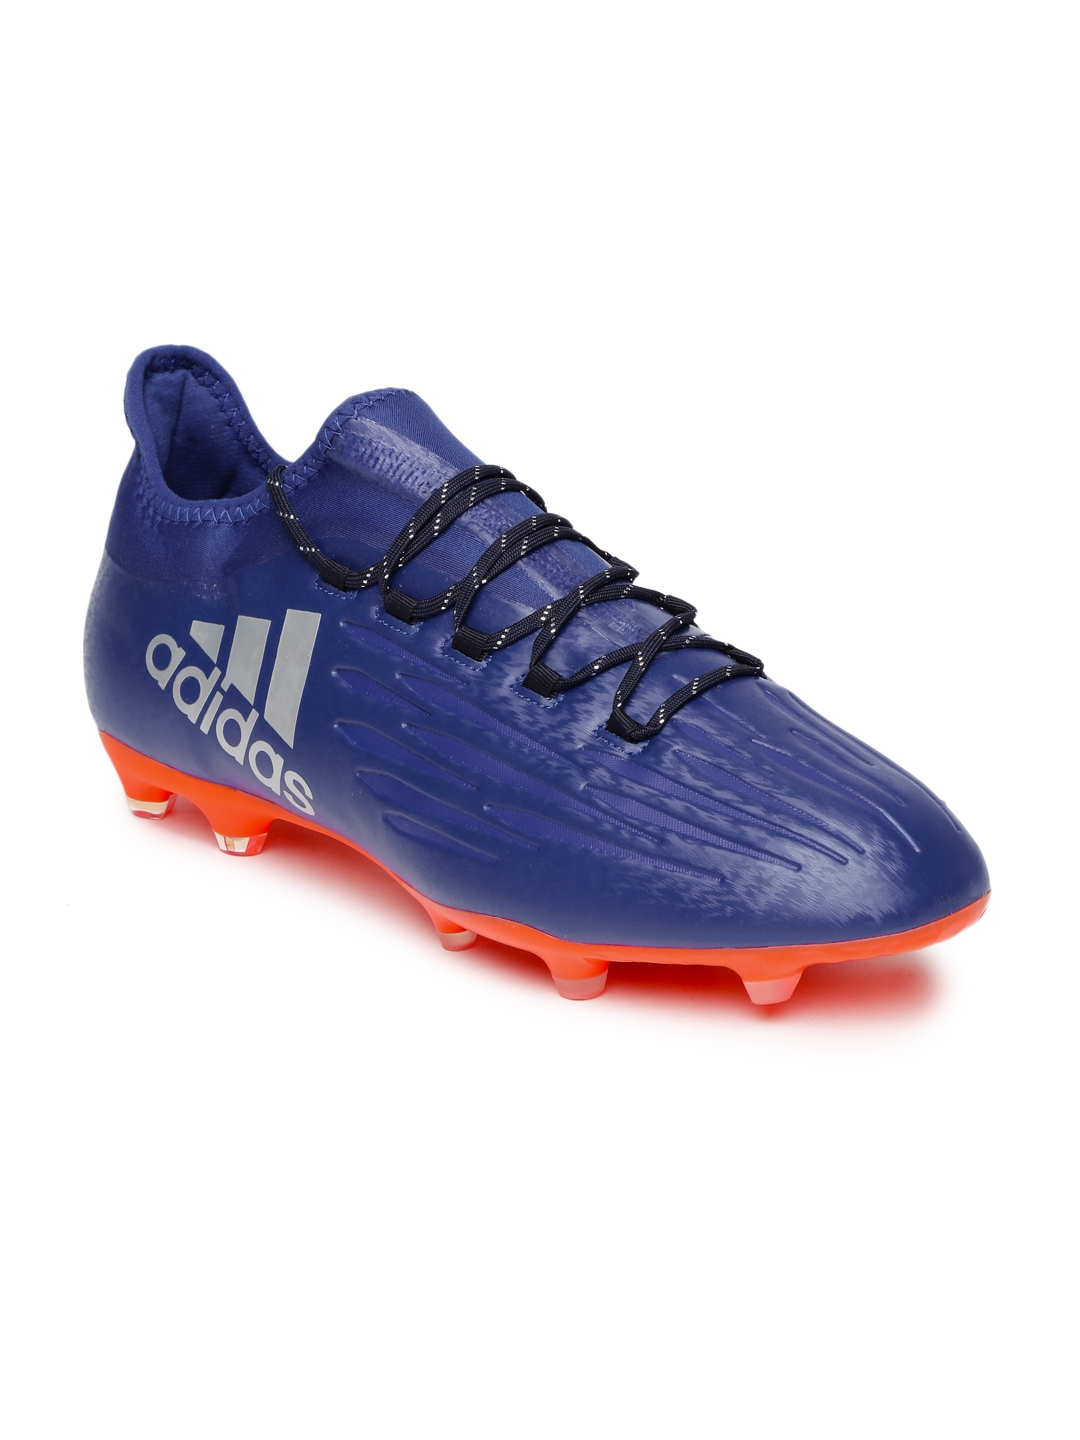 Buy ADIDAS Men Blue Techfit X 16.2 Football Shoes - Sports Shoes 1461717 | Myntra